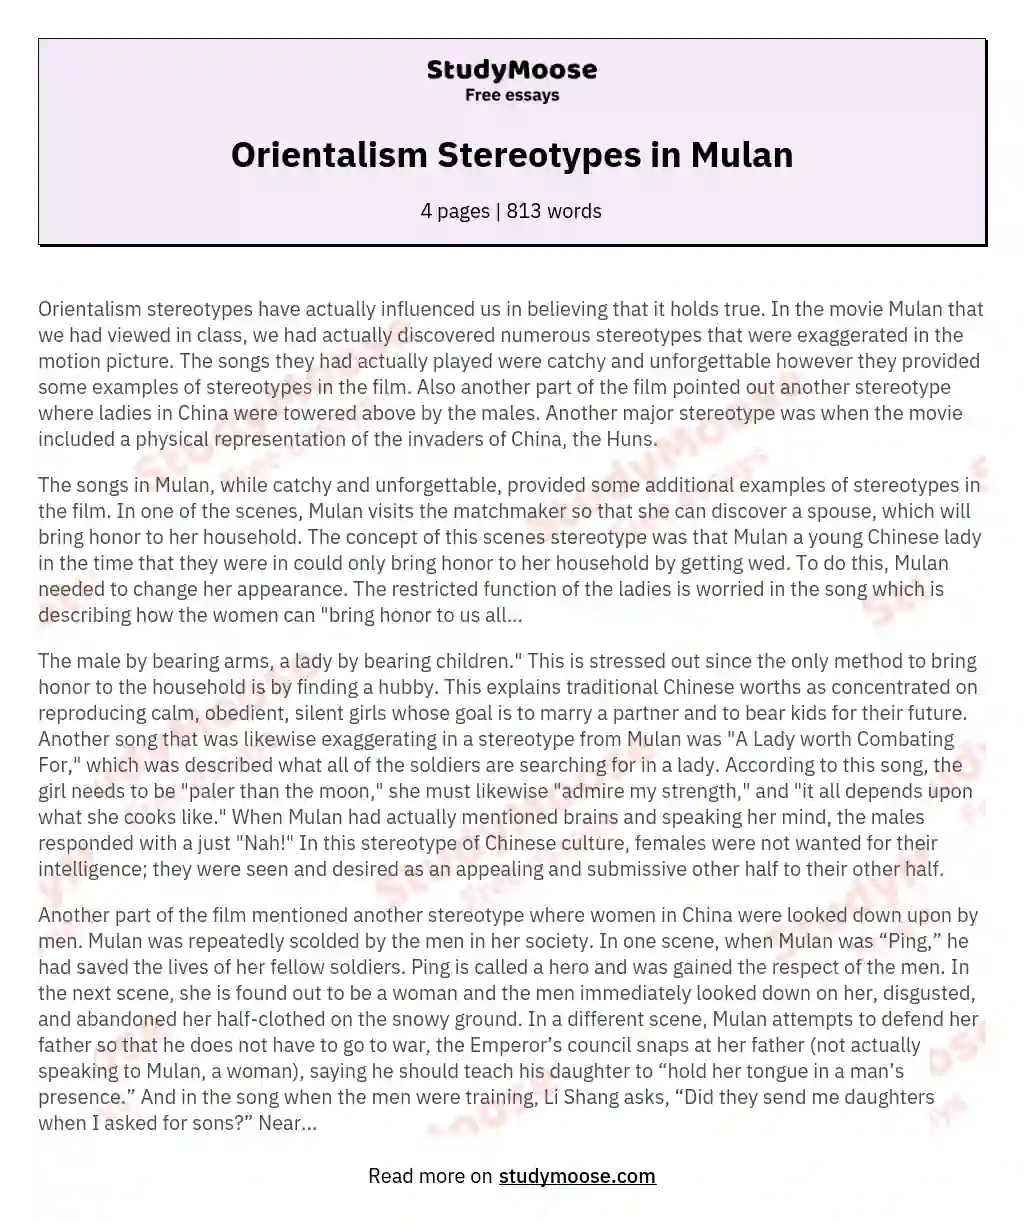 Orientalism Stereotypes in Mulan